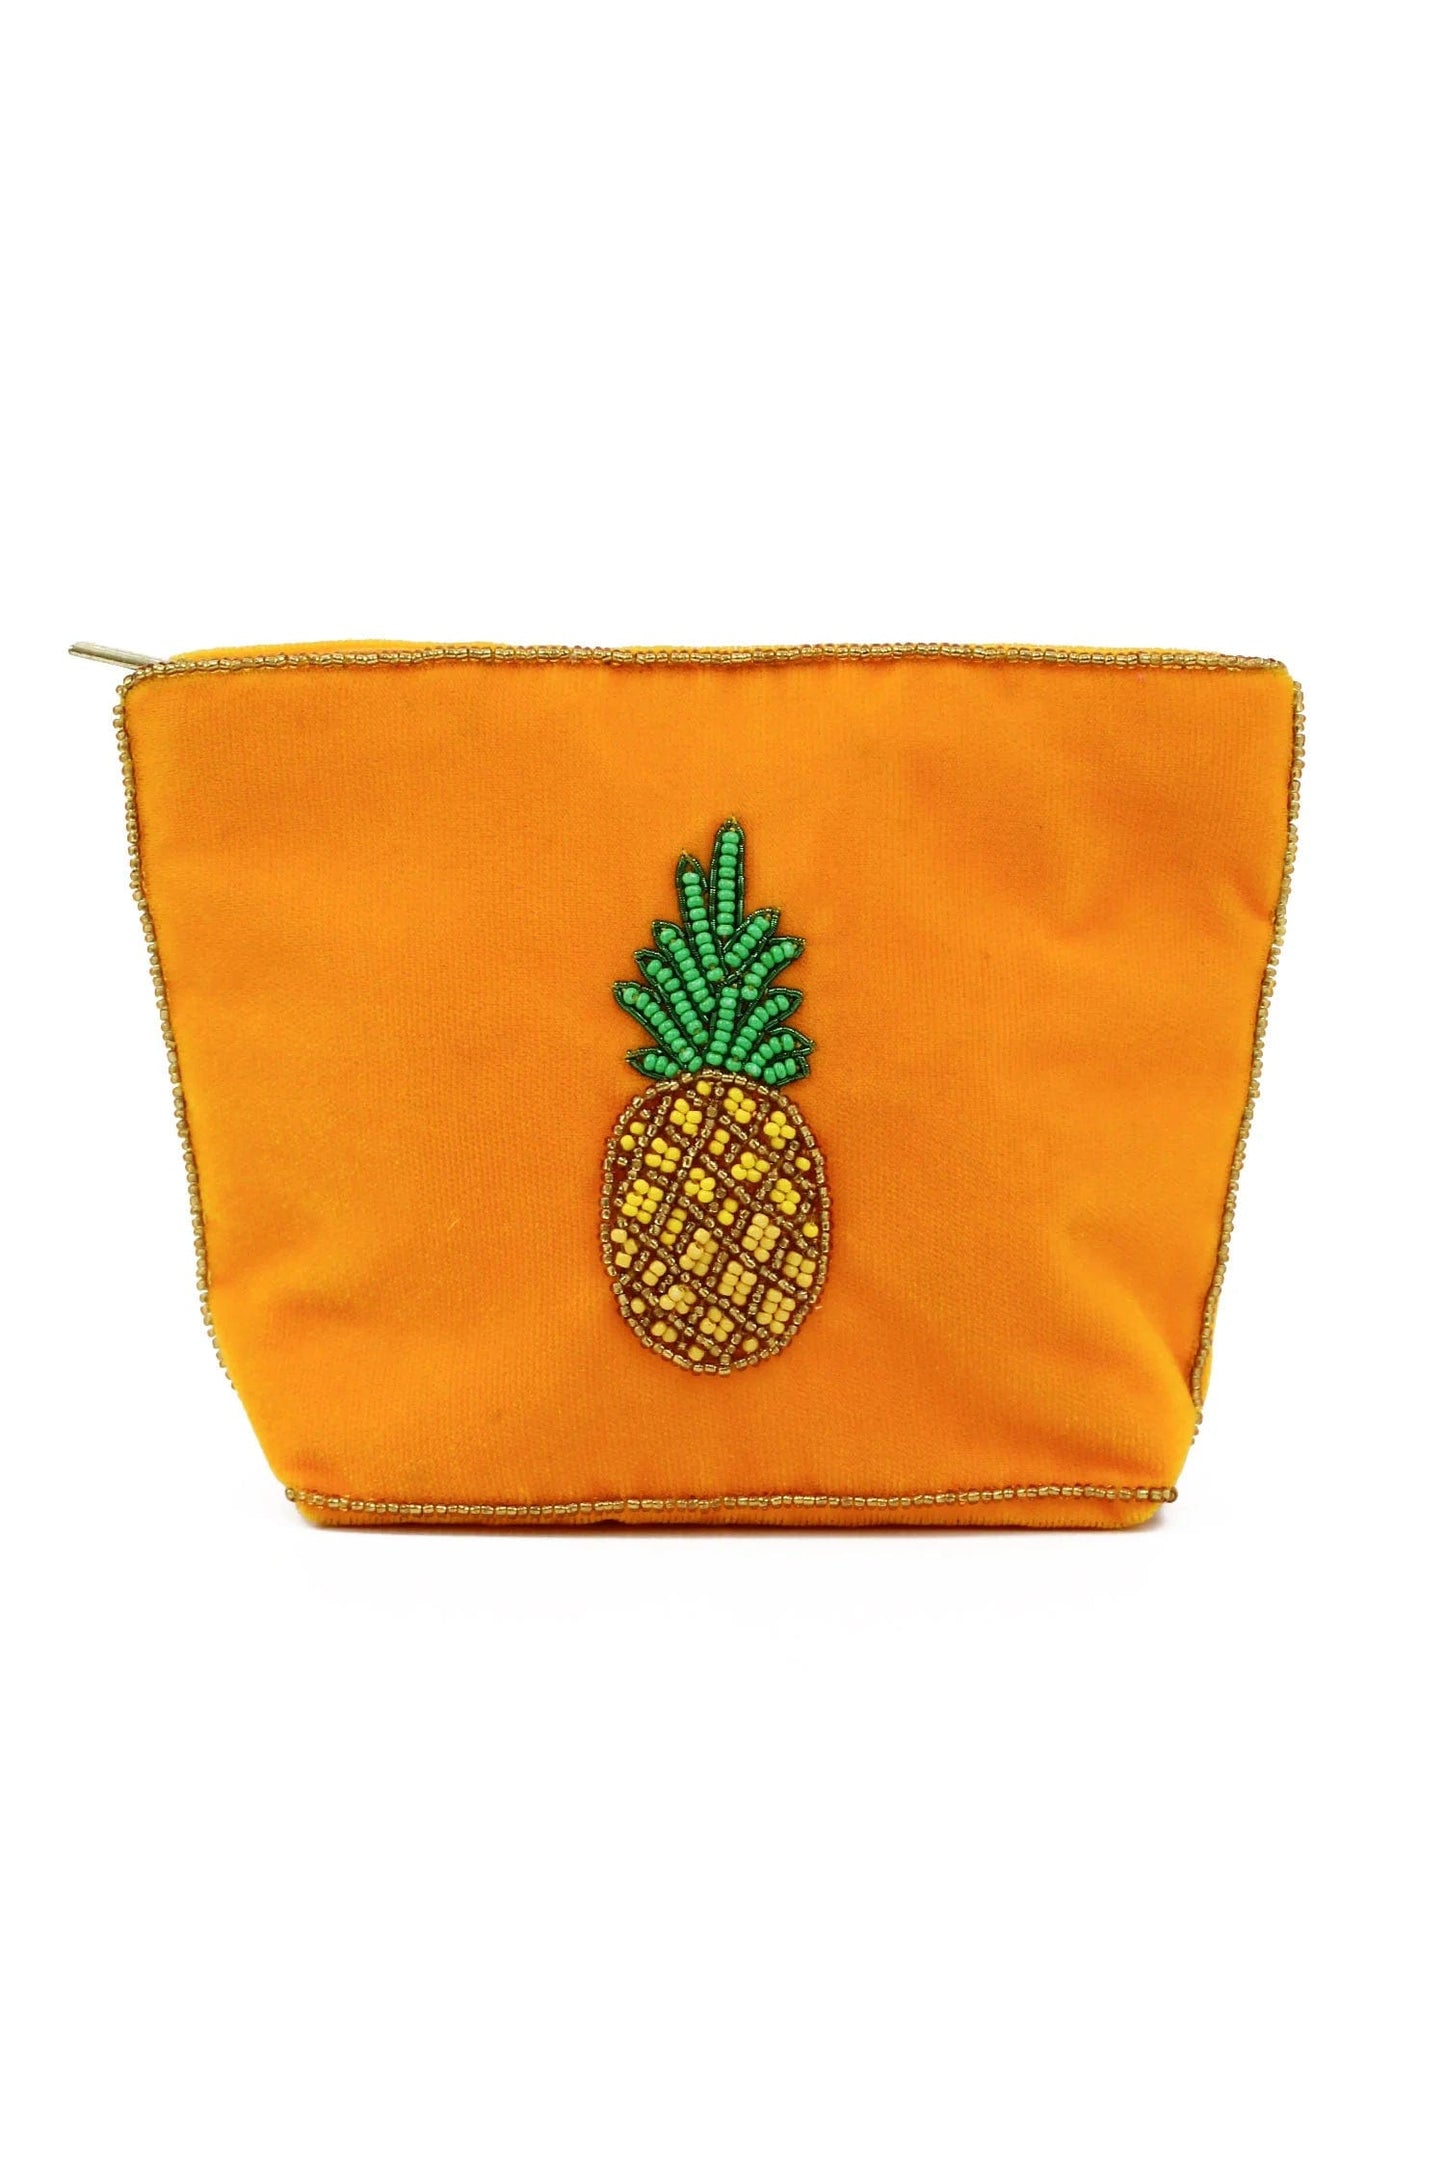 My Doris Toiletry & Cosmetic Bags Pineapple Purse